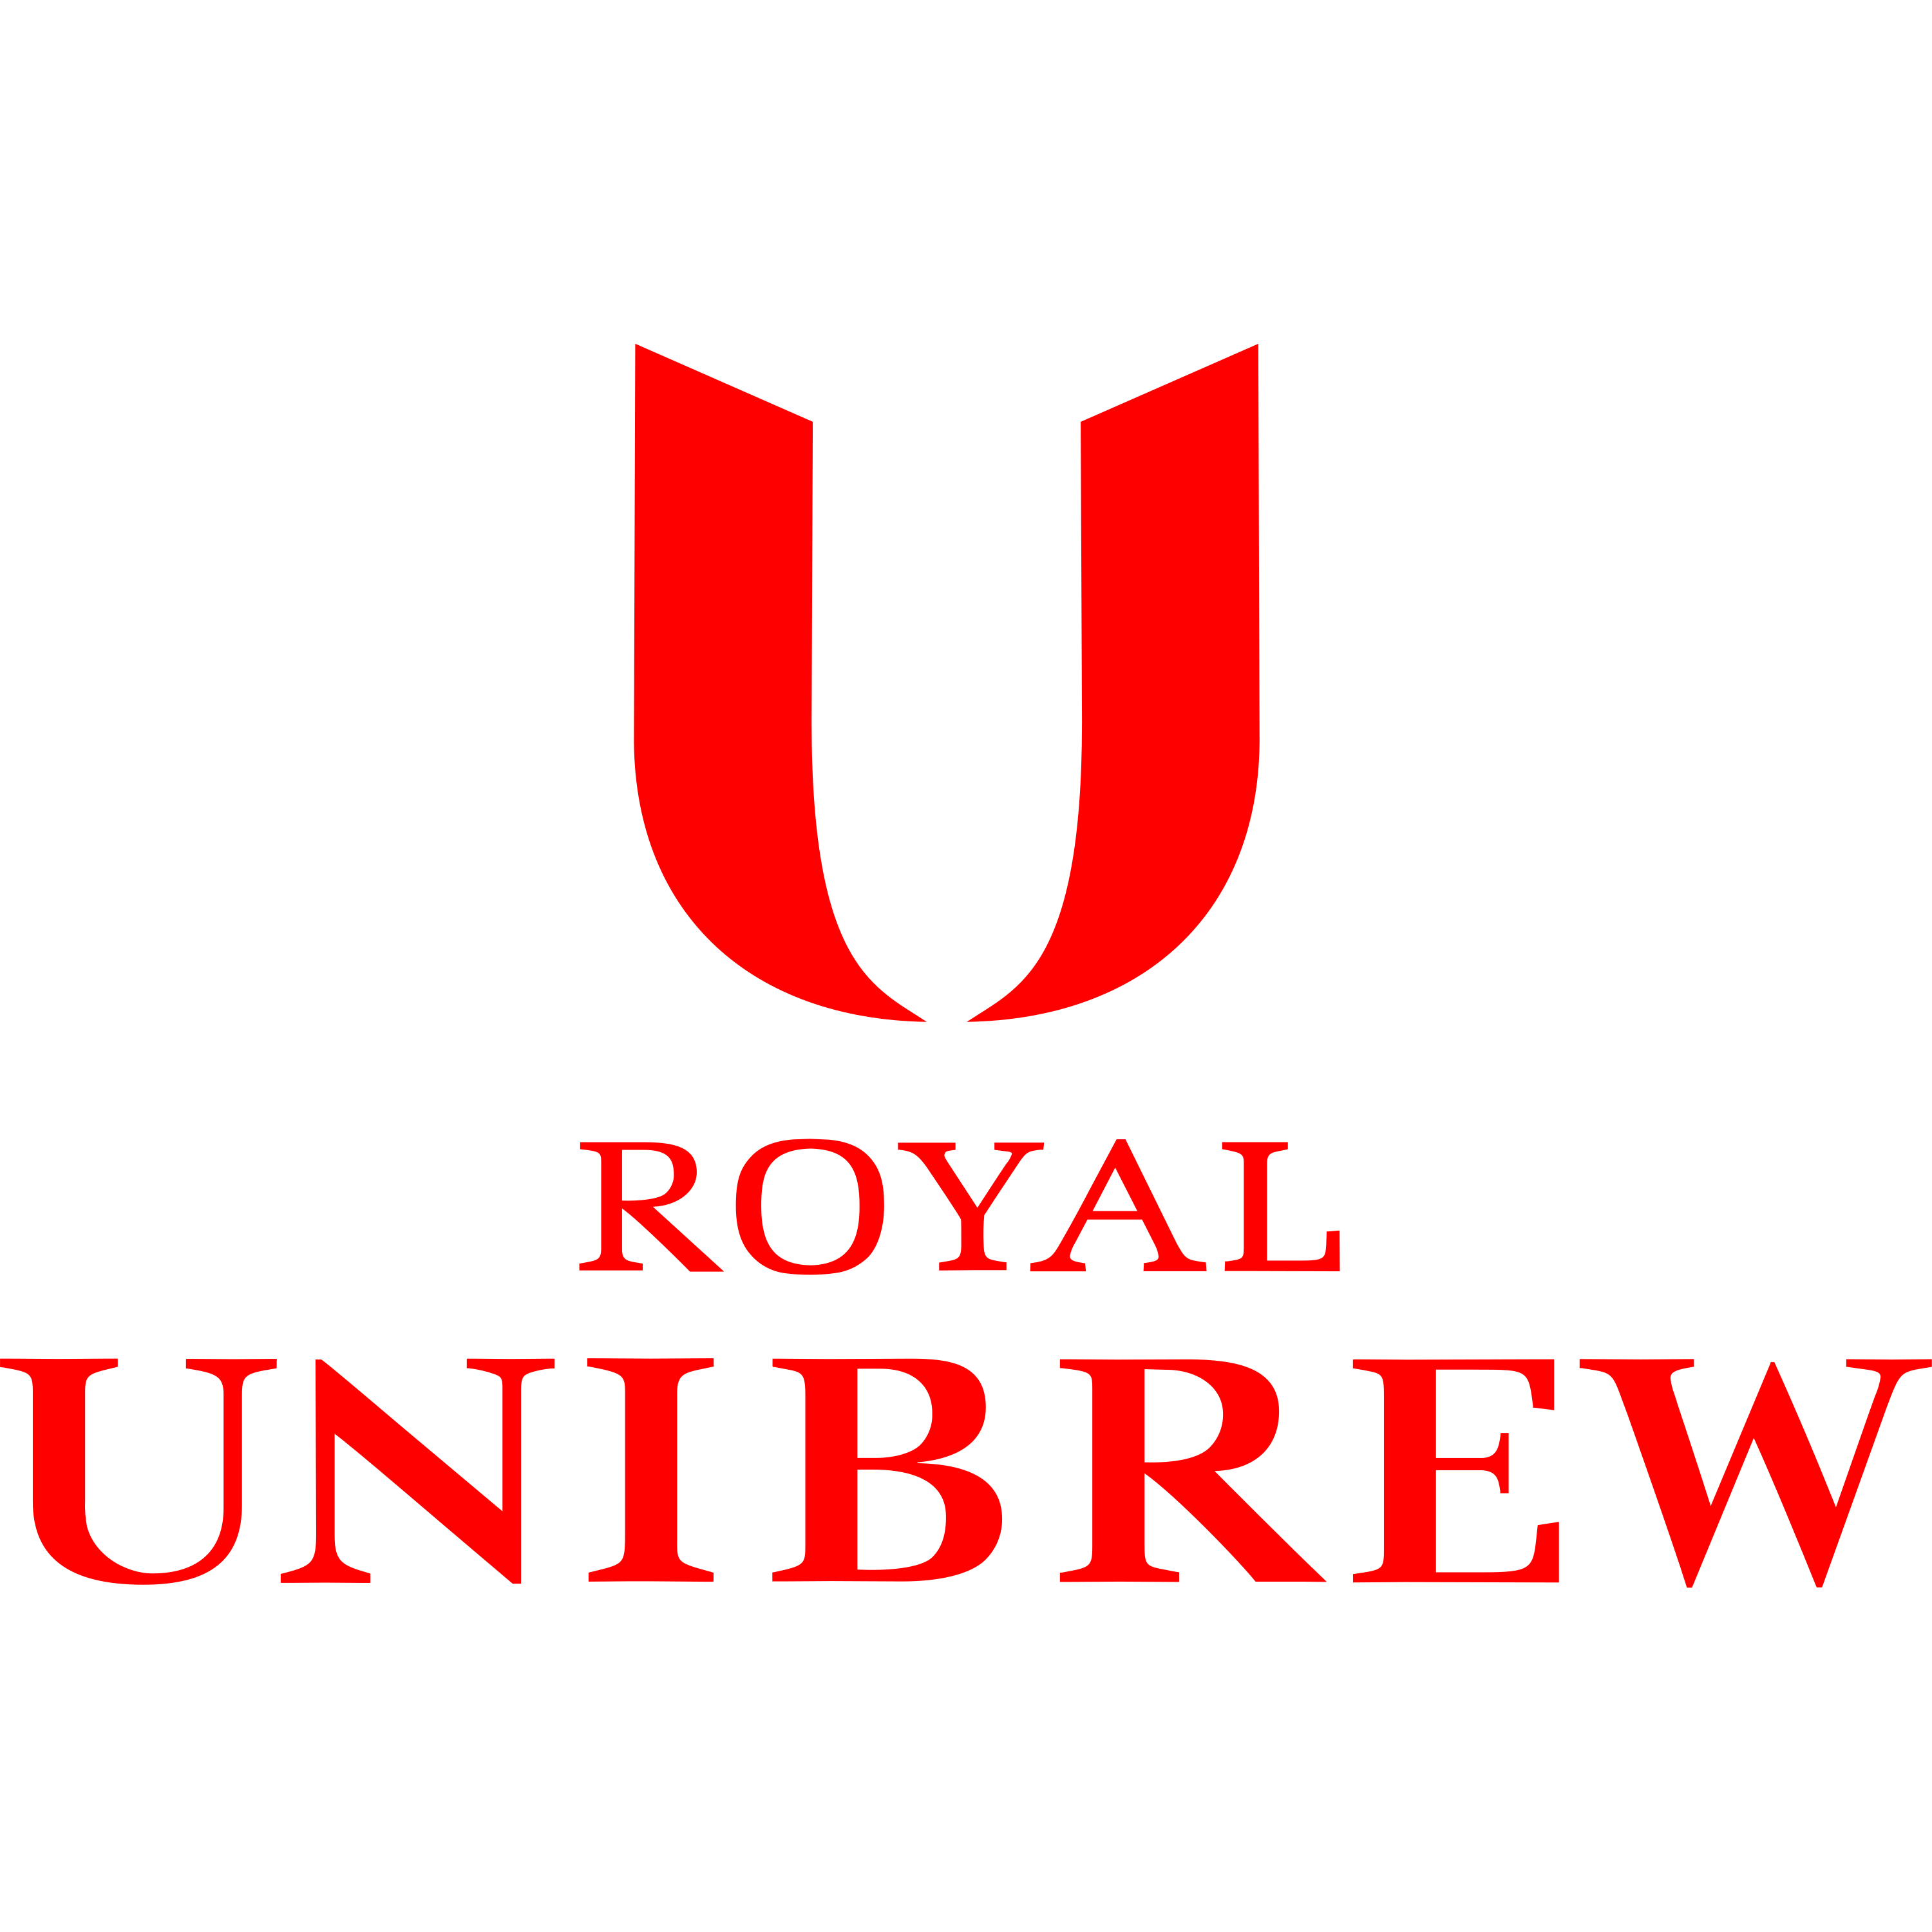 Poyal Unibrew Logo  Transparent Gallery